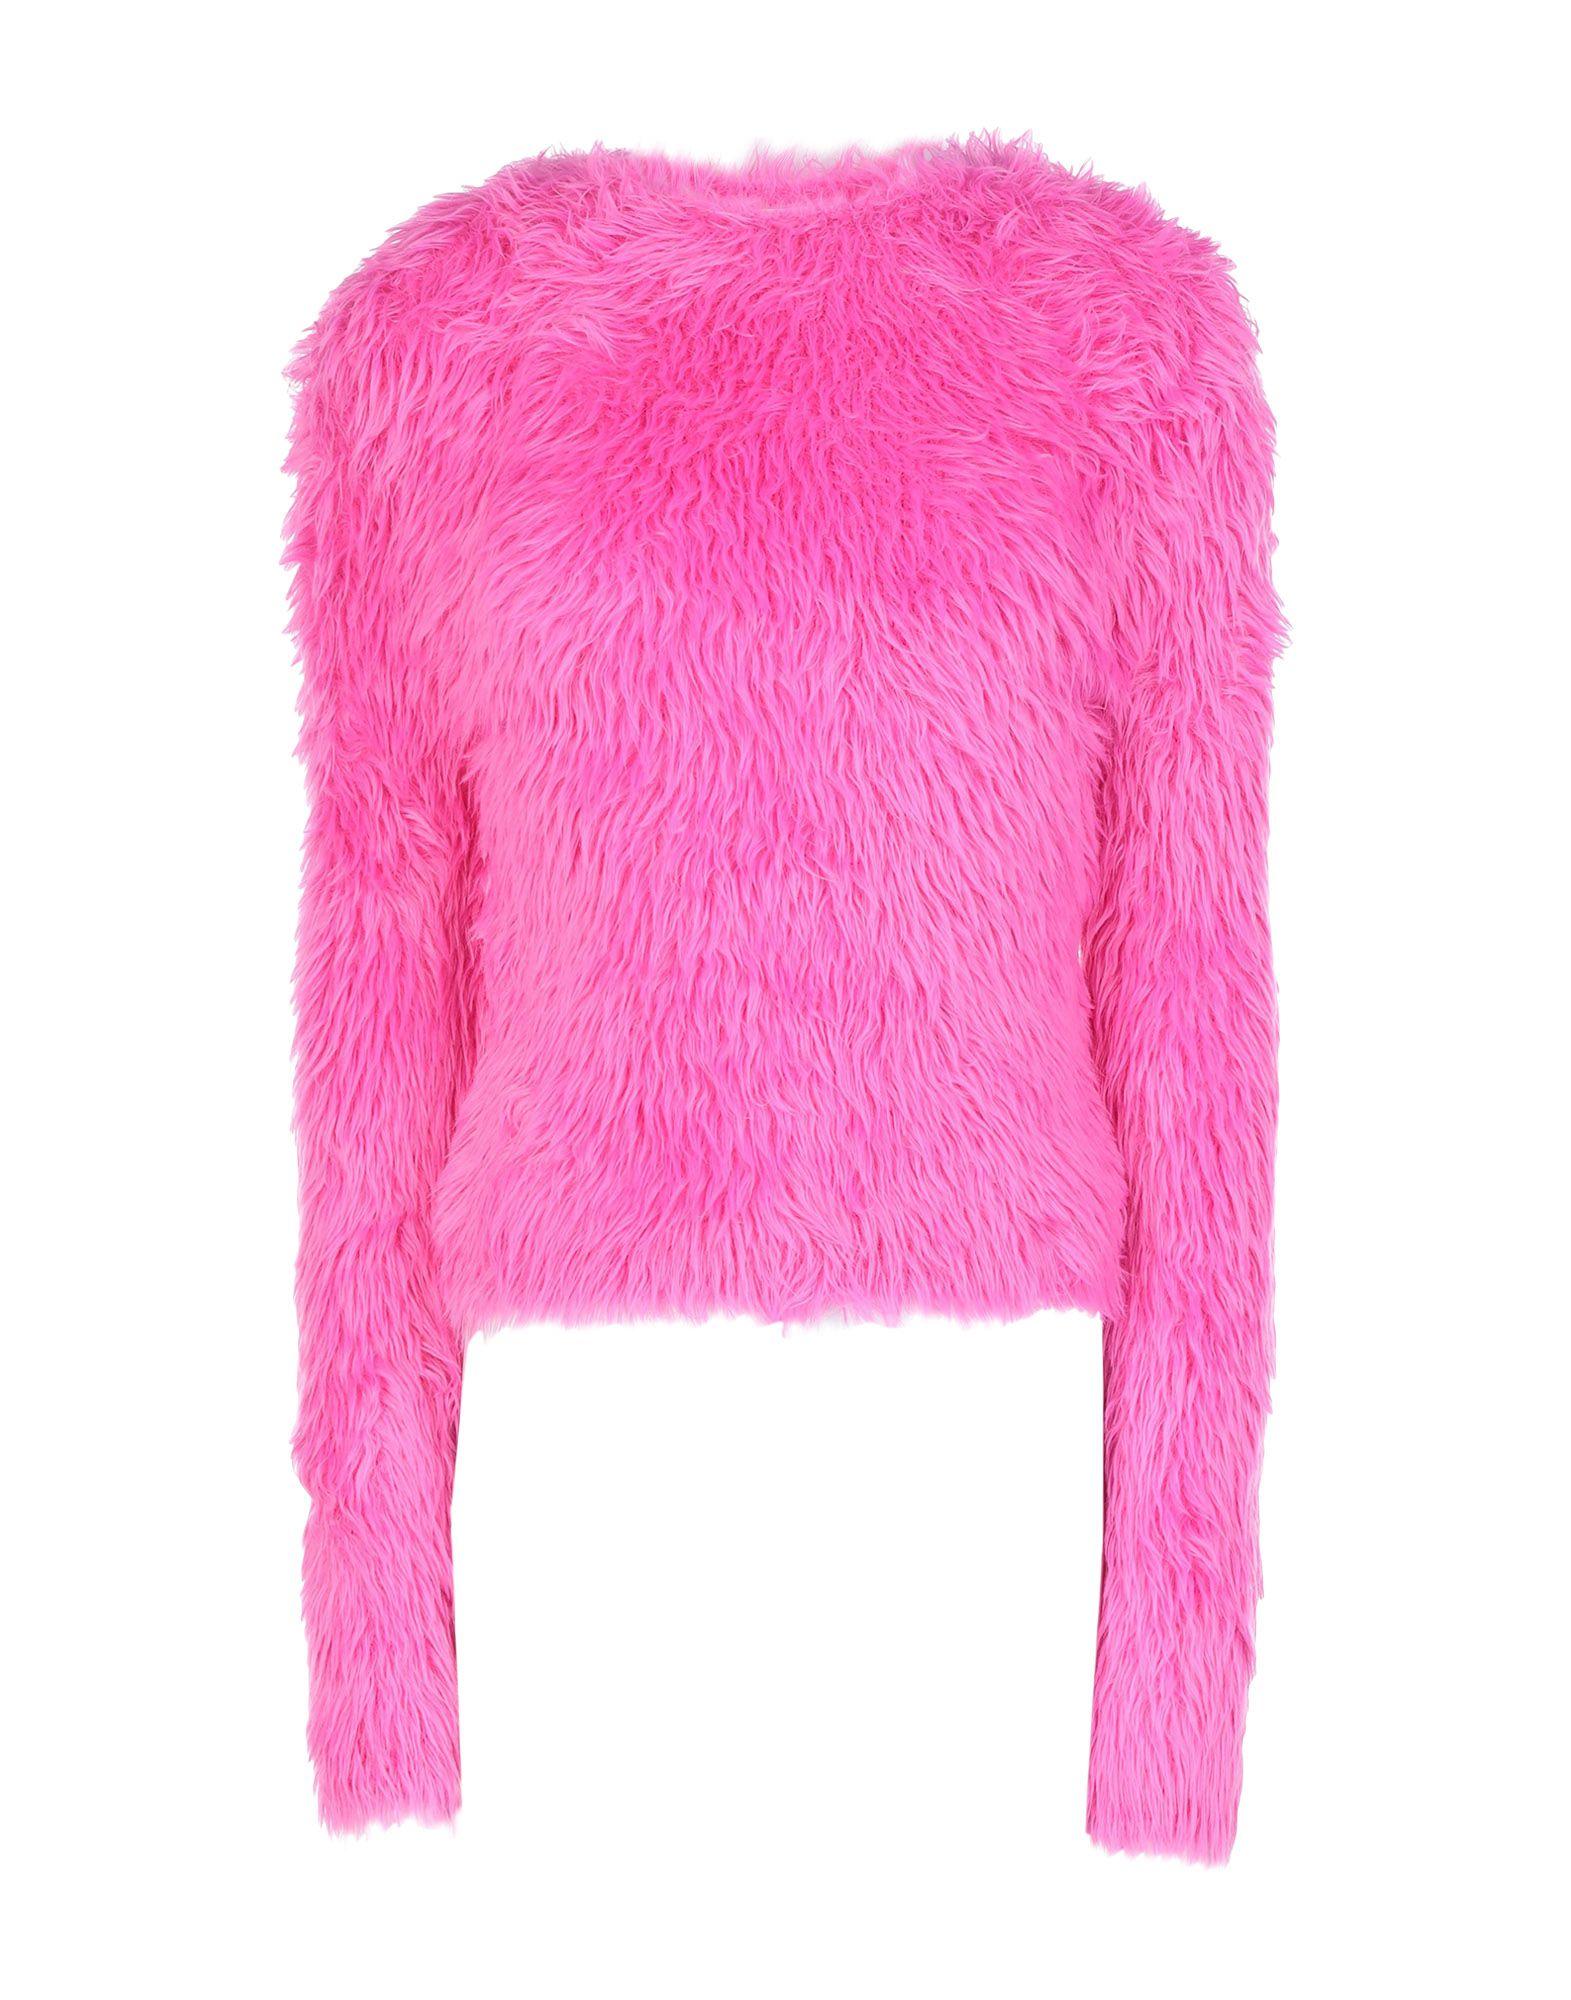 Balenciaga Synthetic Sweater in Fuchsia (Pink) - Lyst